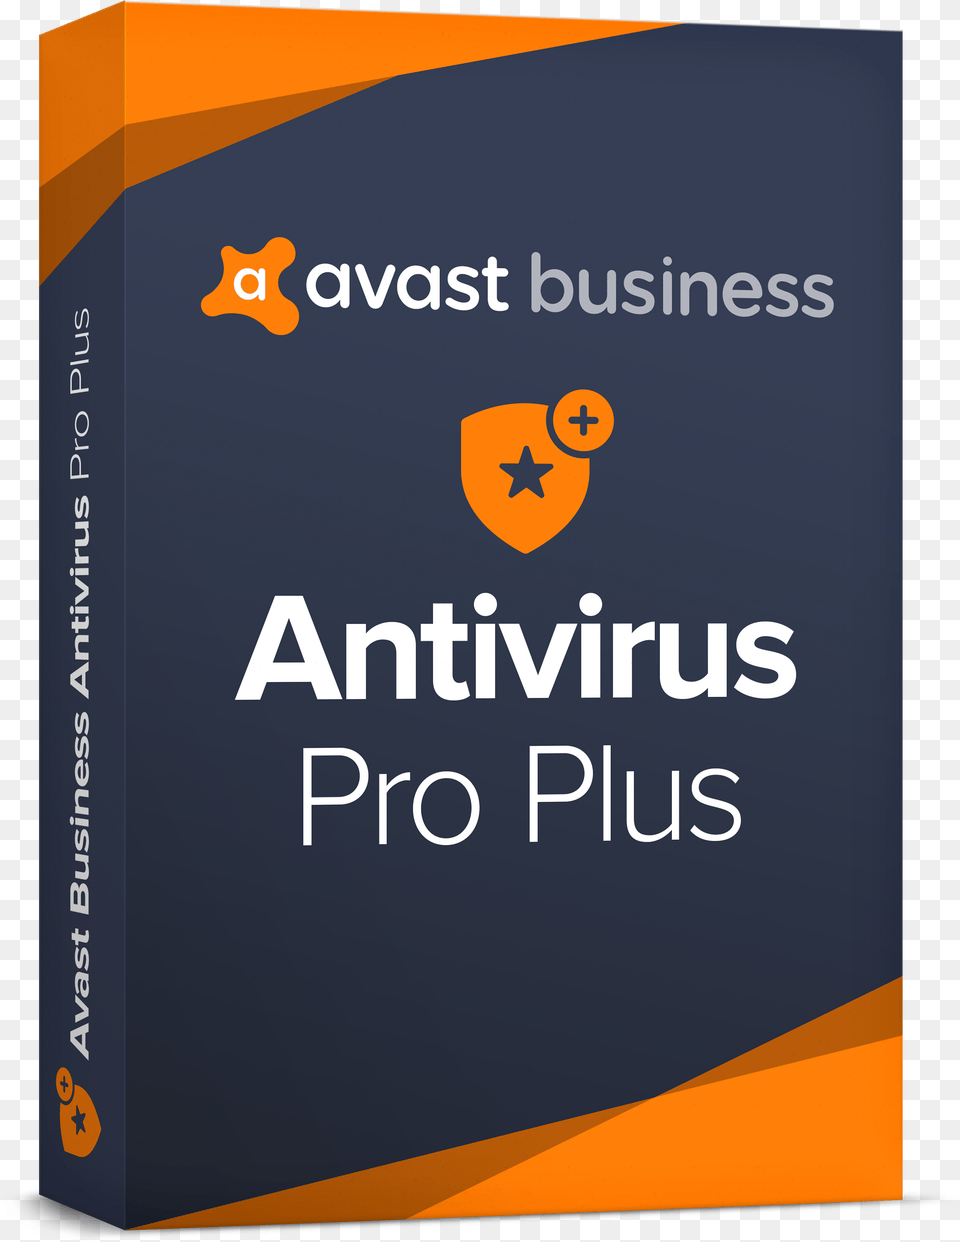 Avast Pro Antivirus 2018, Book, Publication Png Image